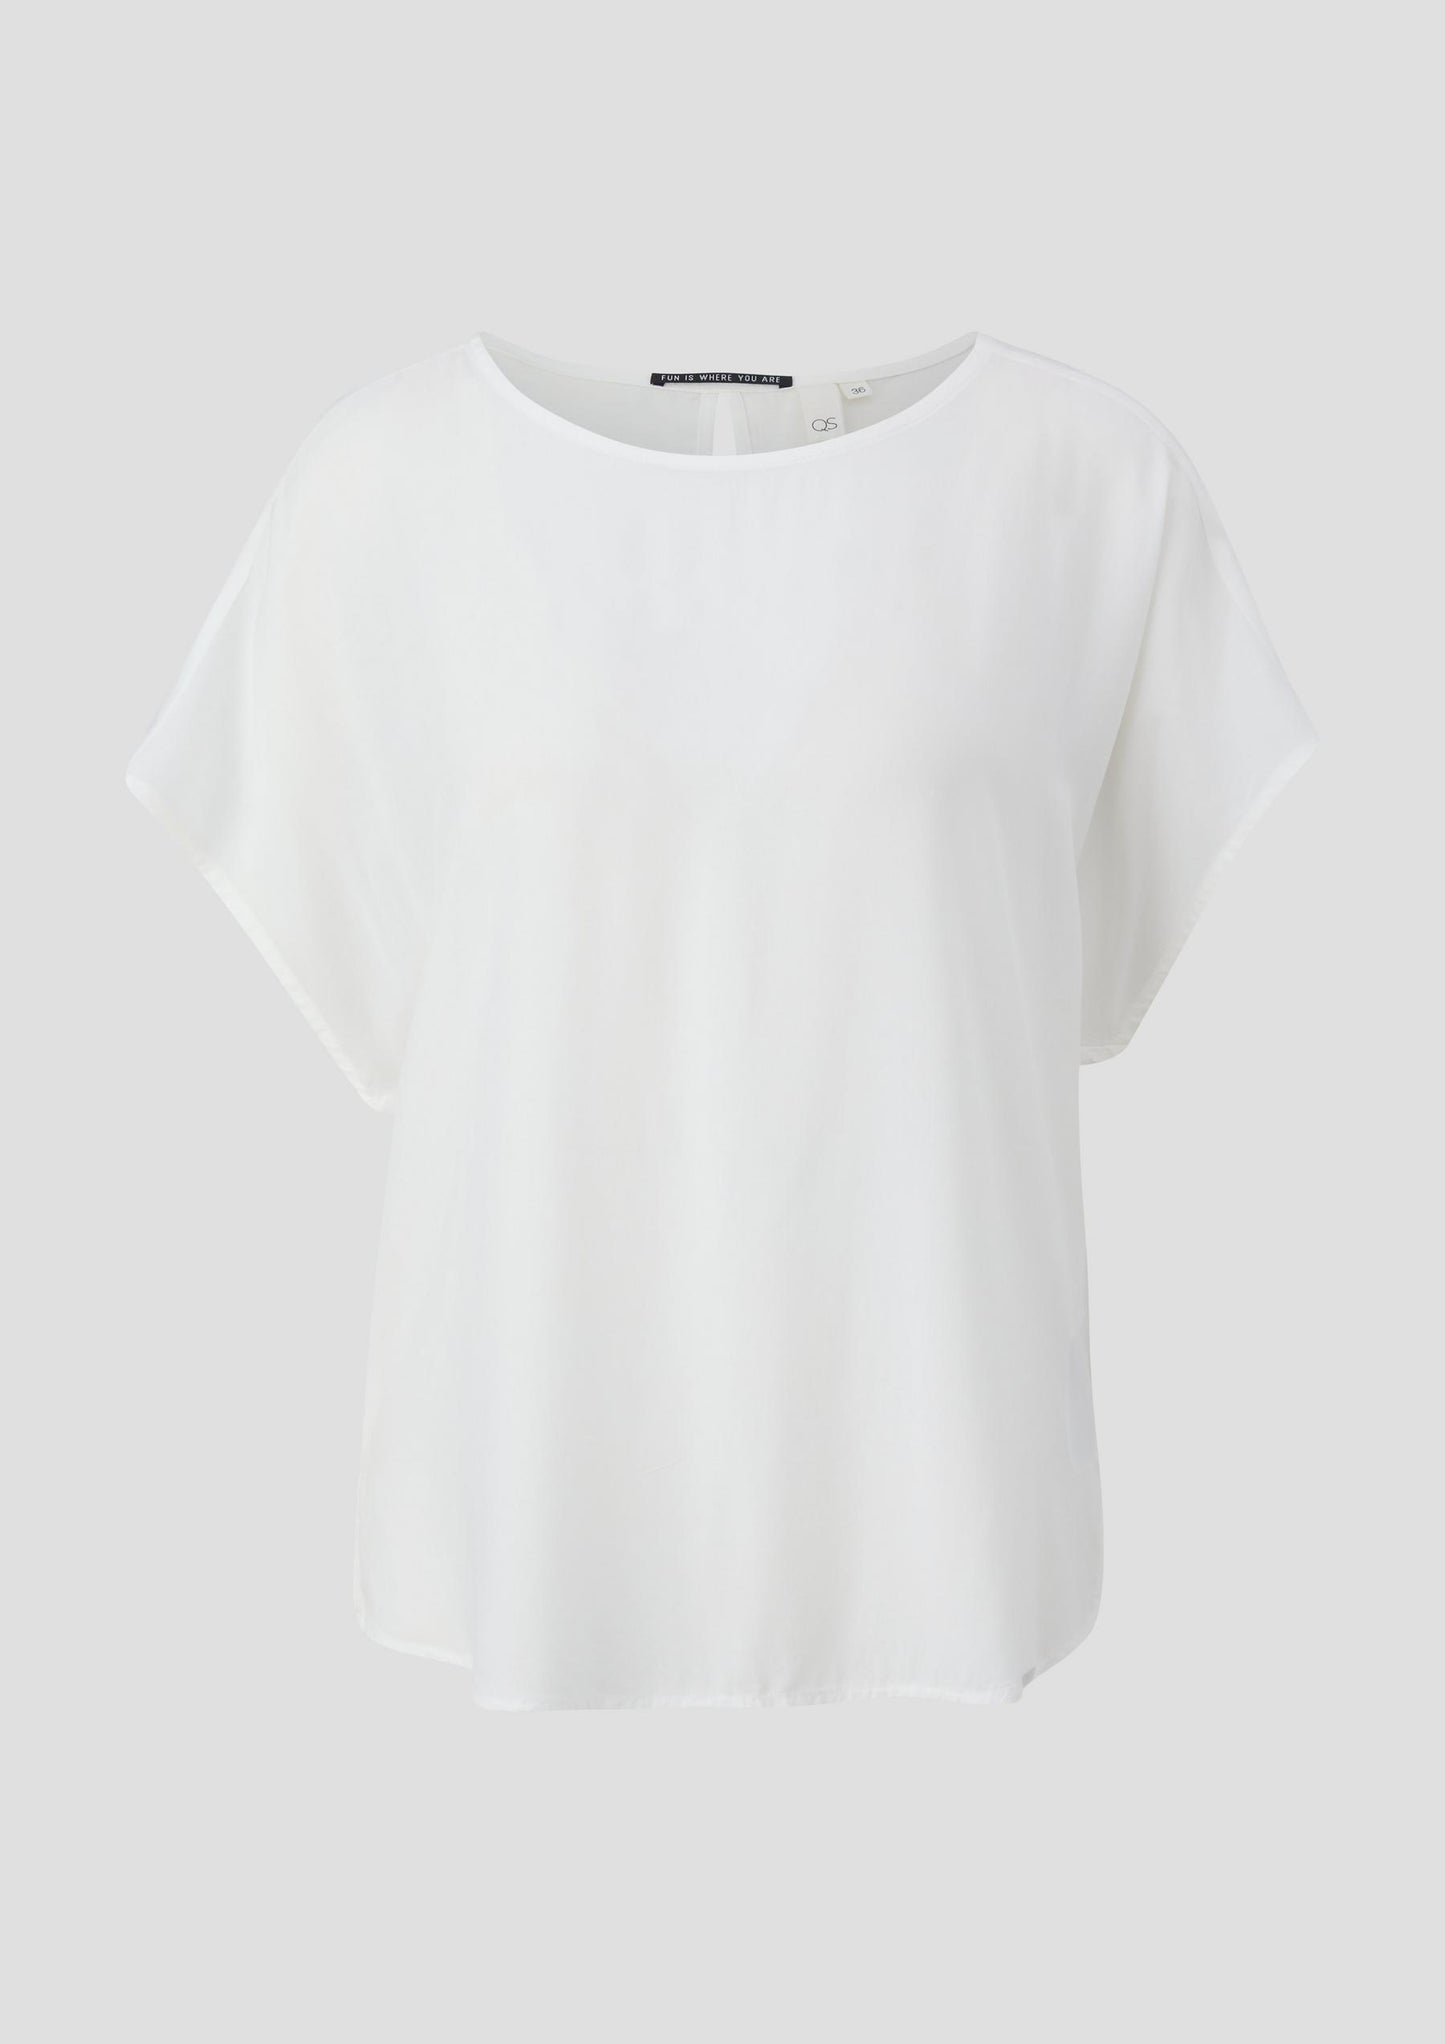 QS - Oversize-Shirt - Farbe: ecru